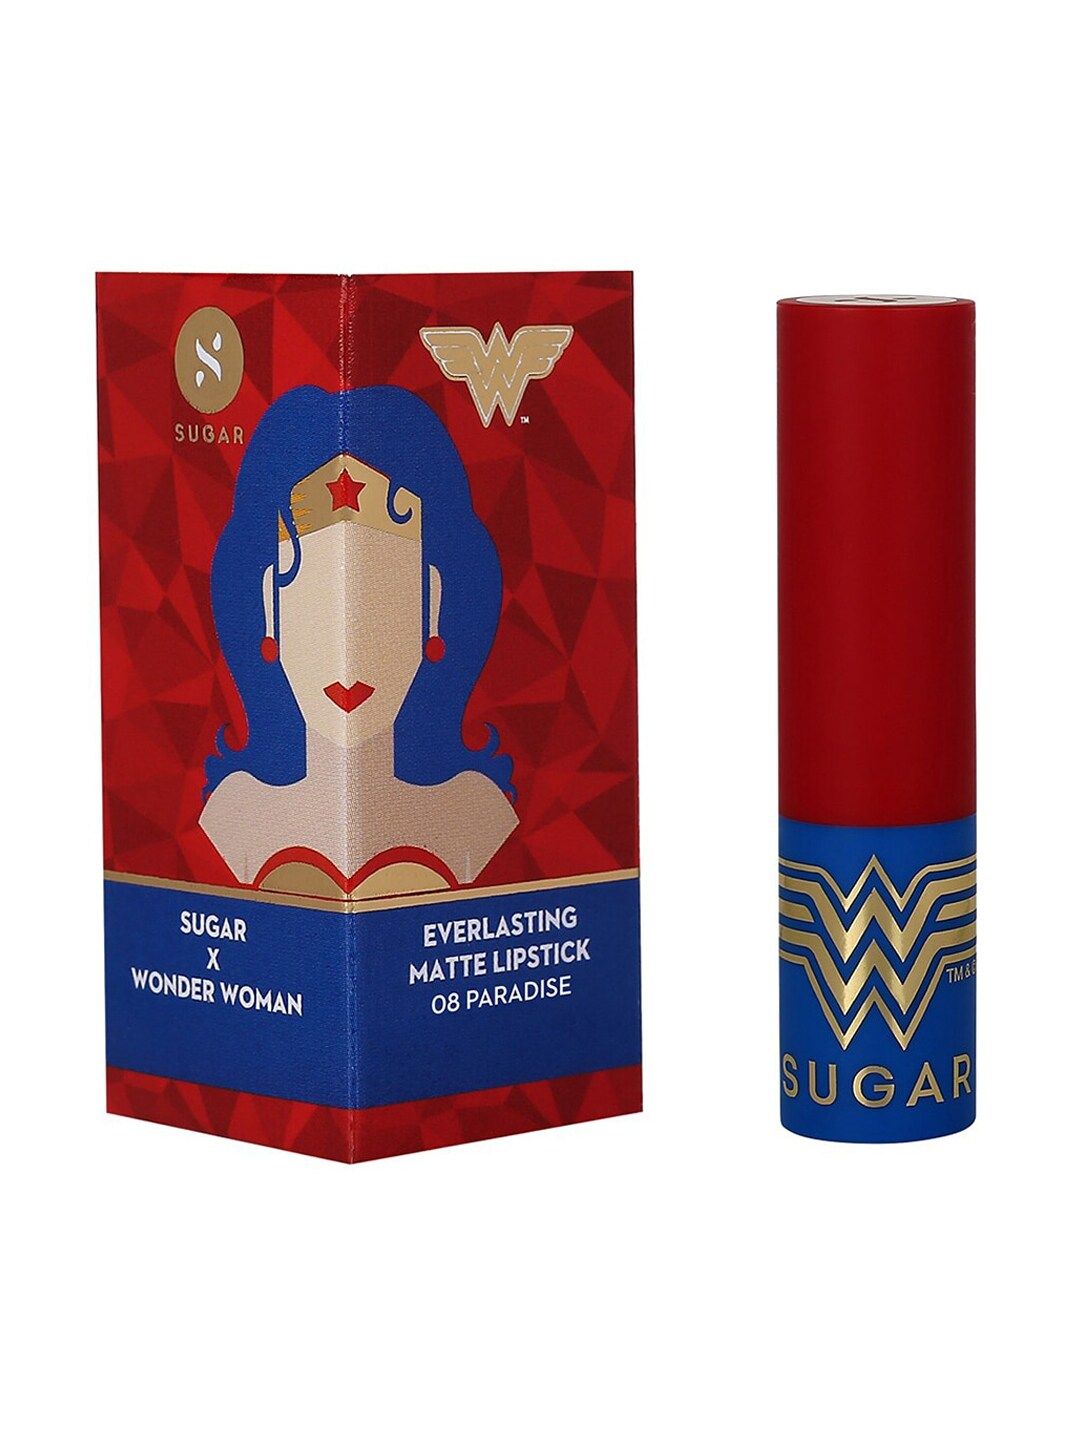 SUGAR X Wonder Woman Everlasting Matte Lipstick - 08 Paradise-3.2g Price in India